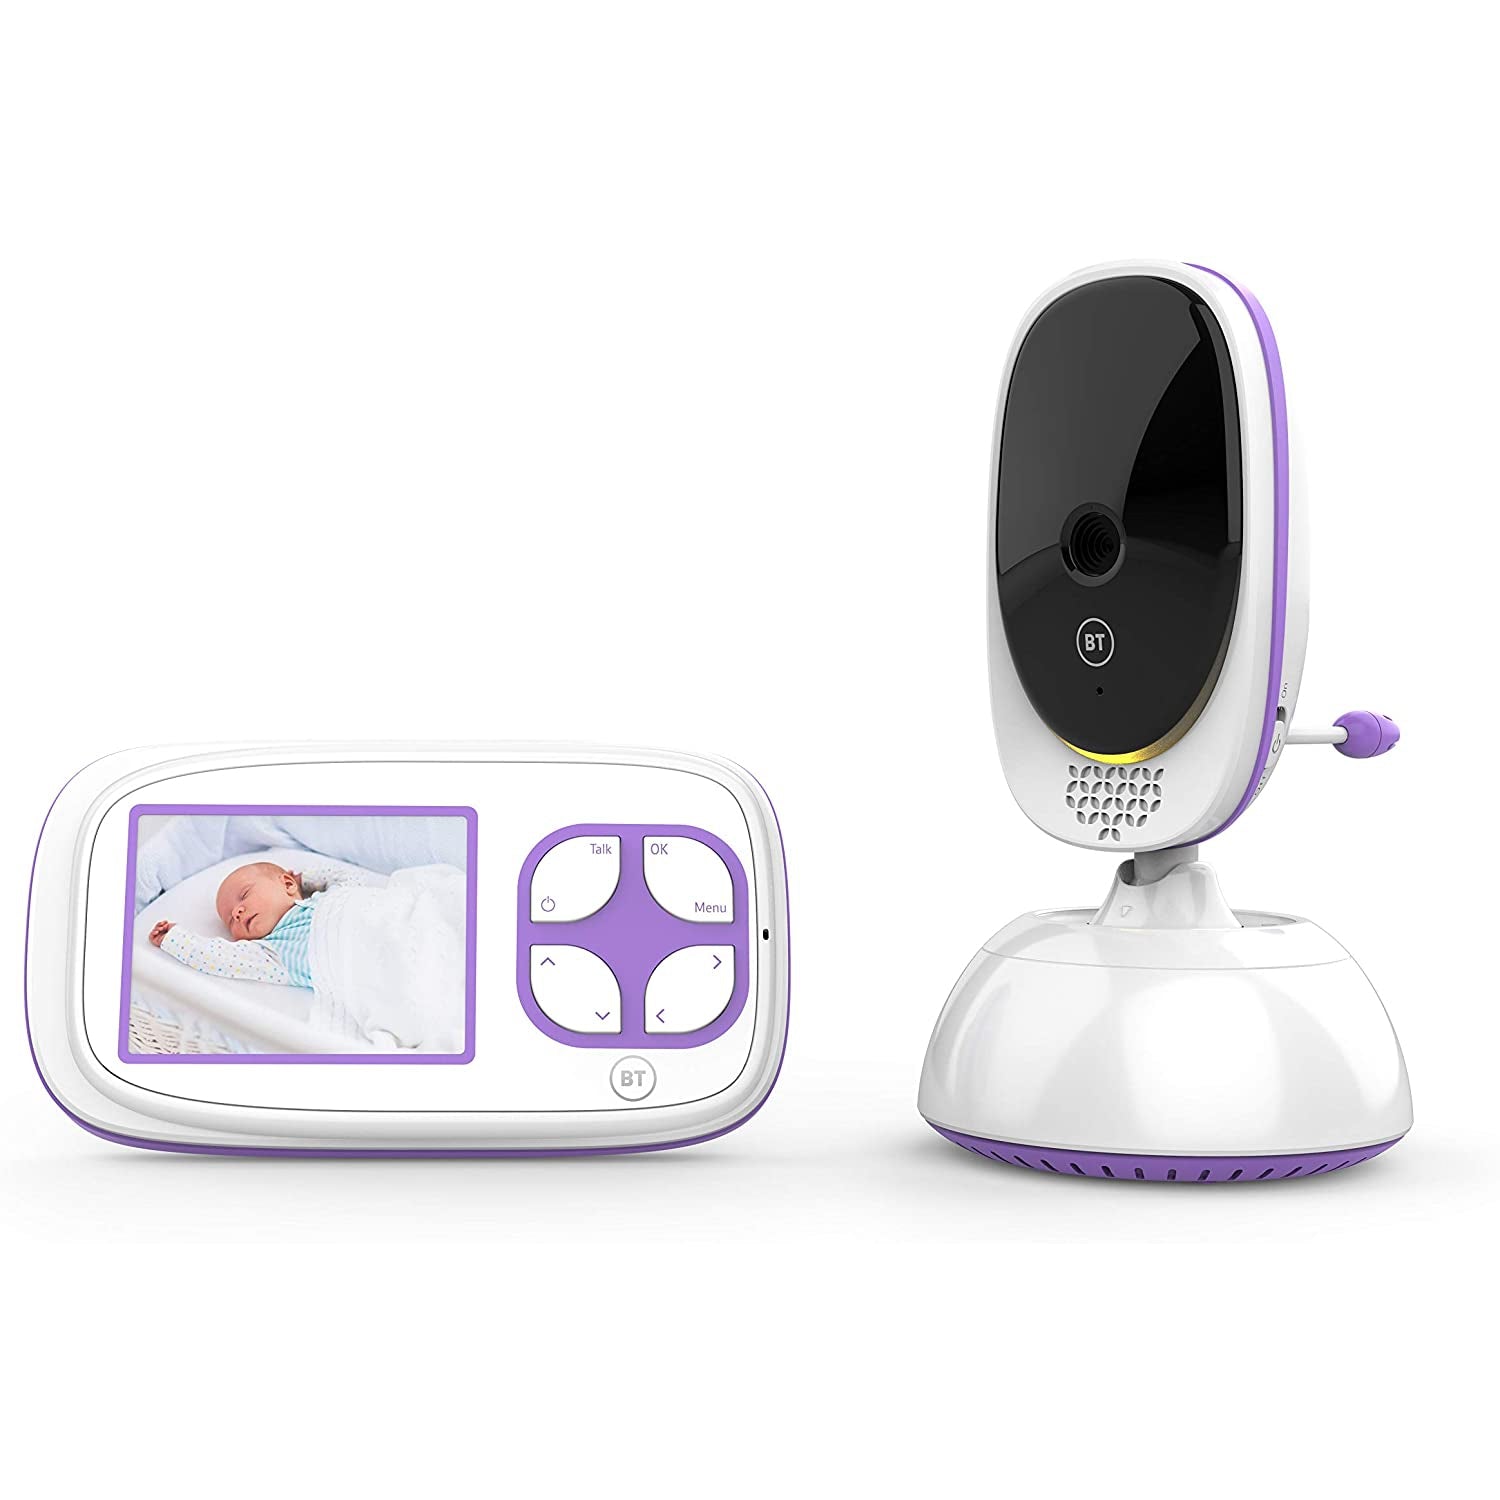 BT Video Baby Monitor 5000 - Refurbished Good